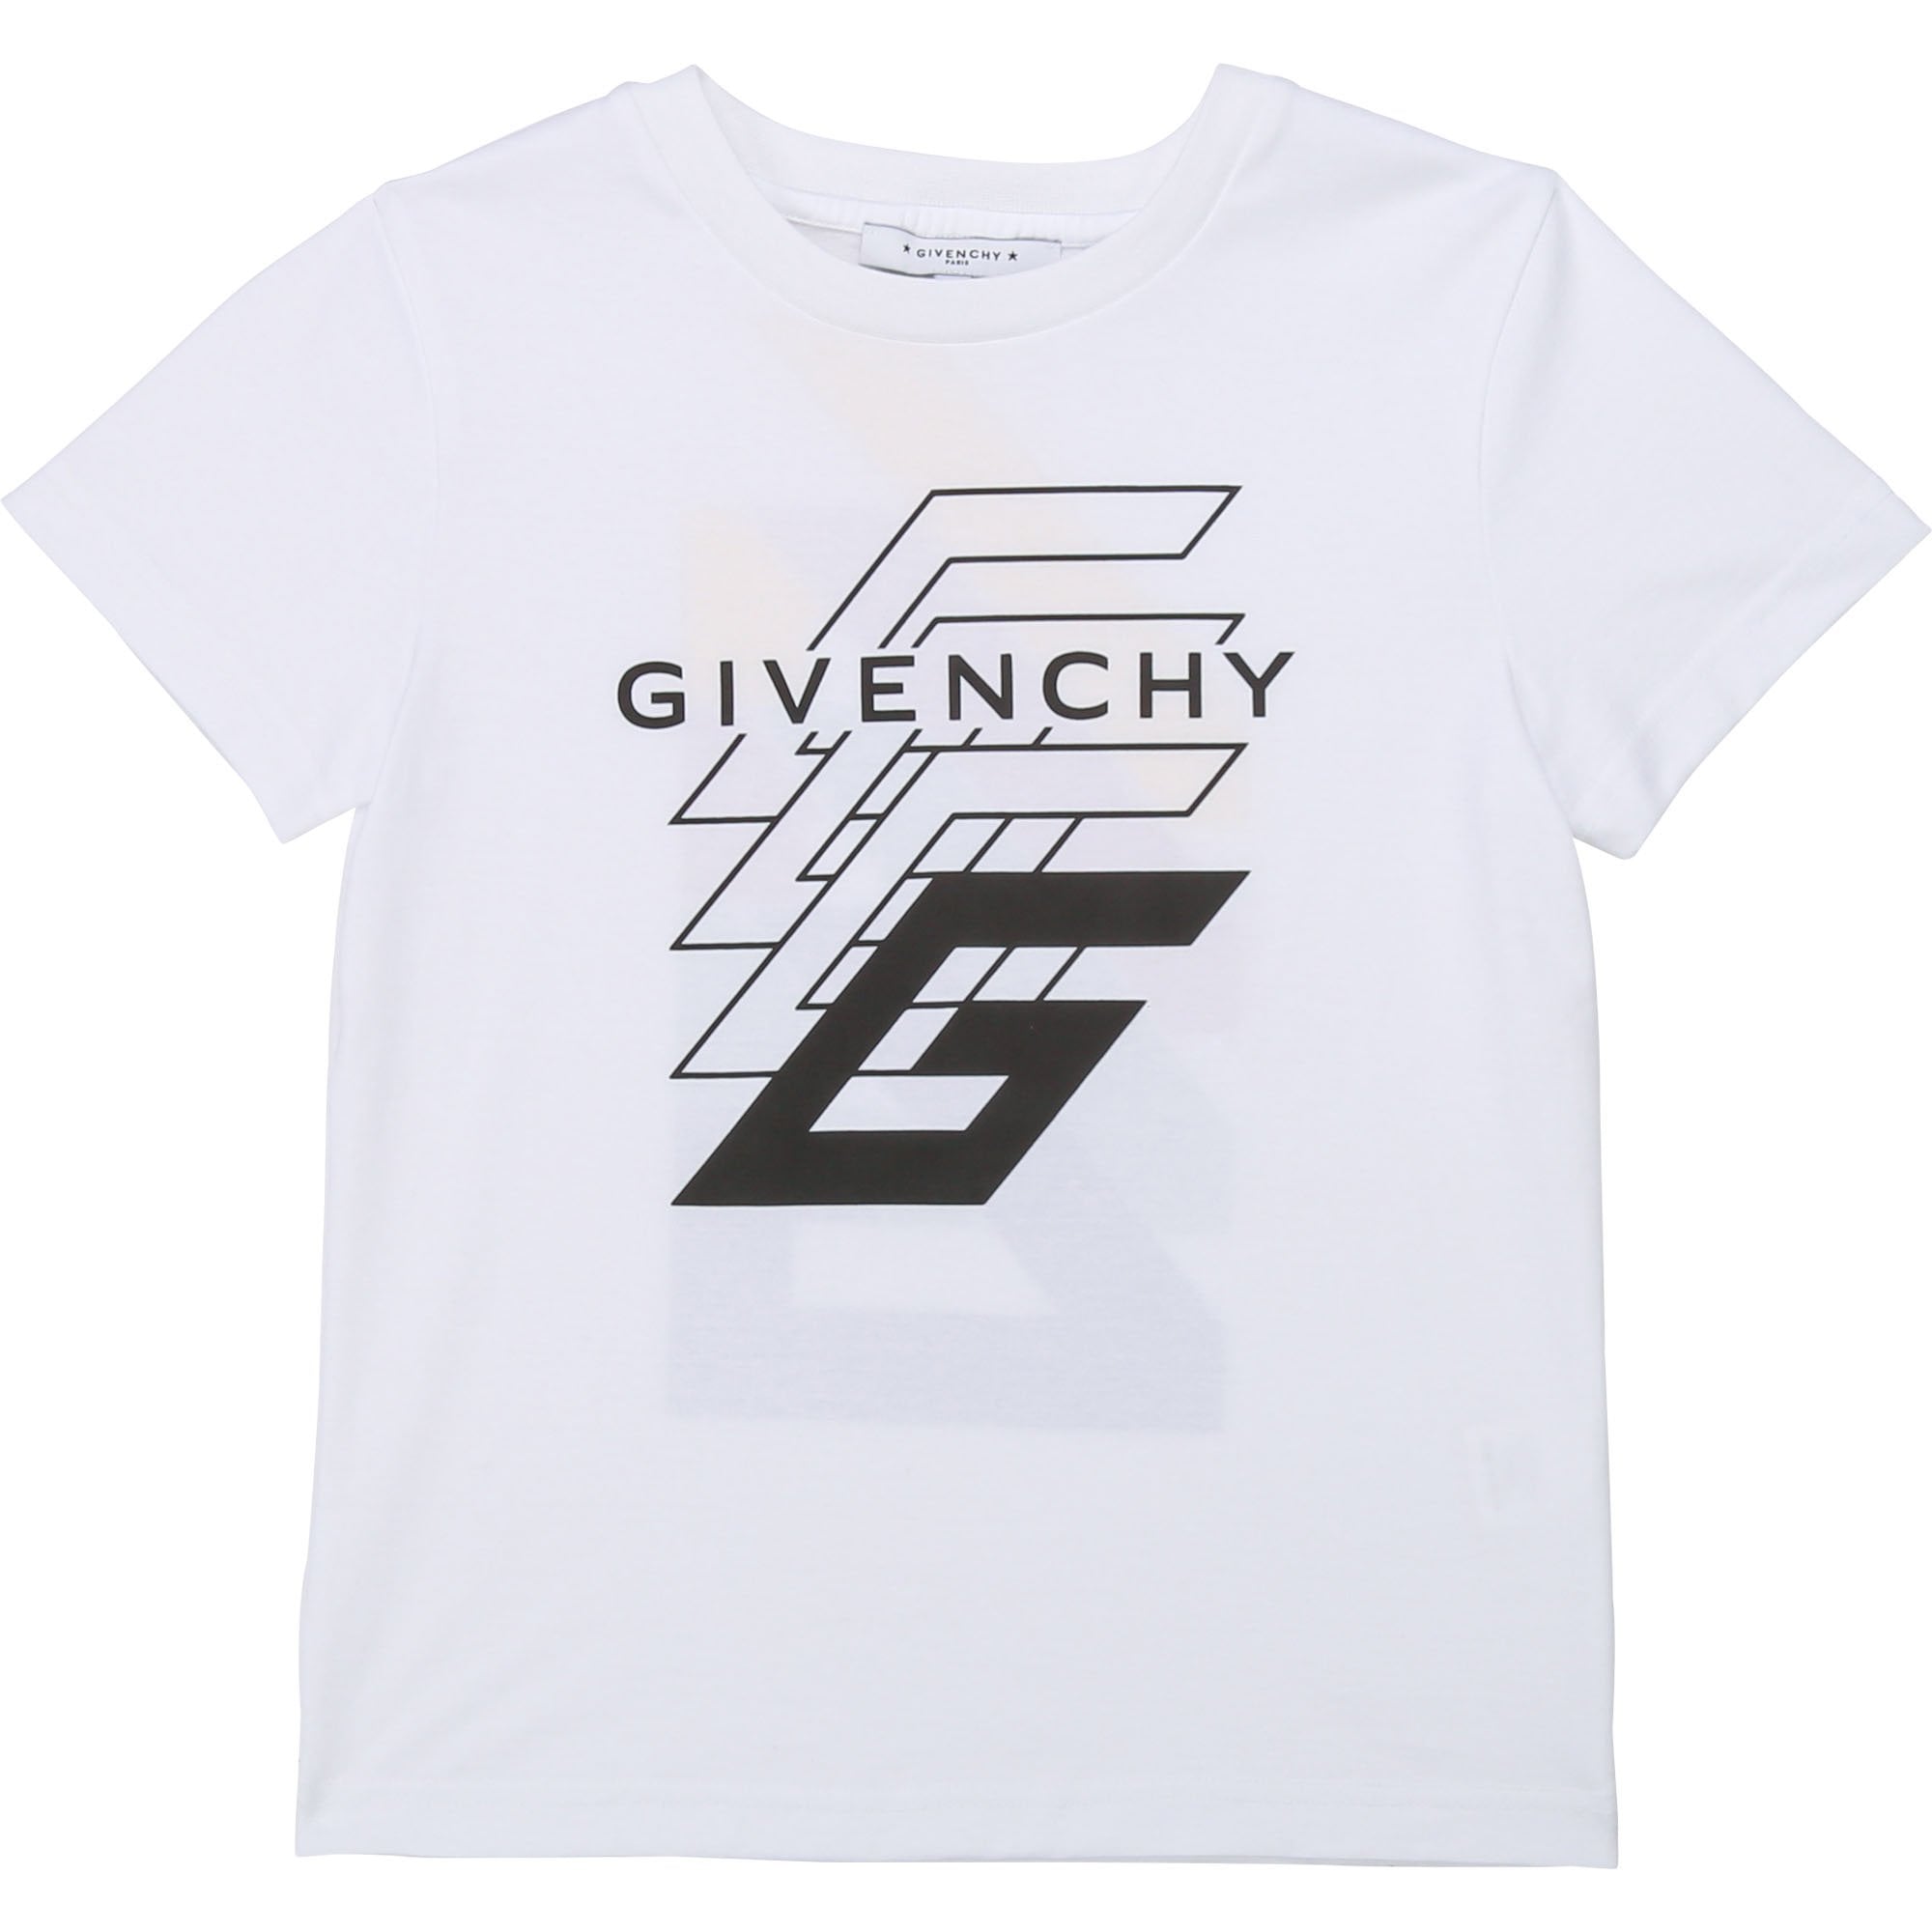 Givenchy Boys Cotton T-shirt White - WHITE 4Y